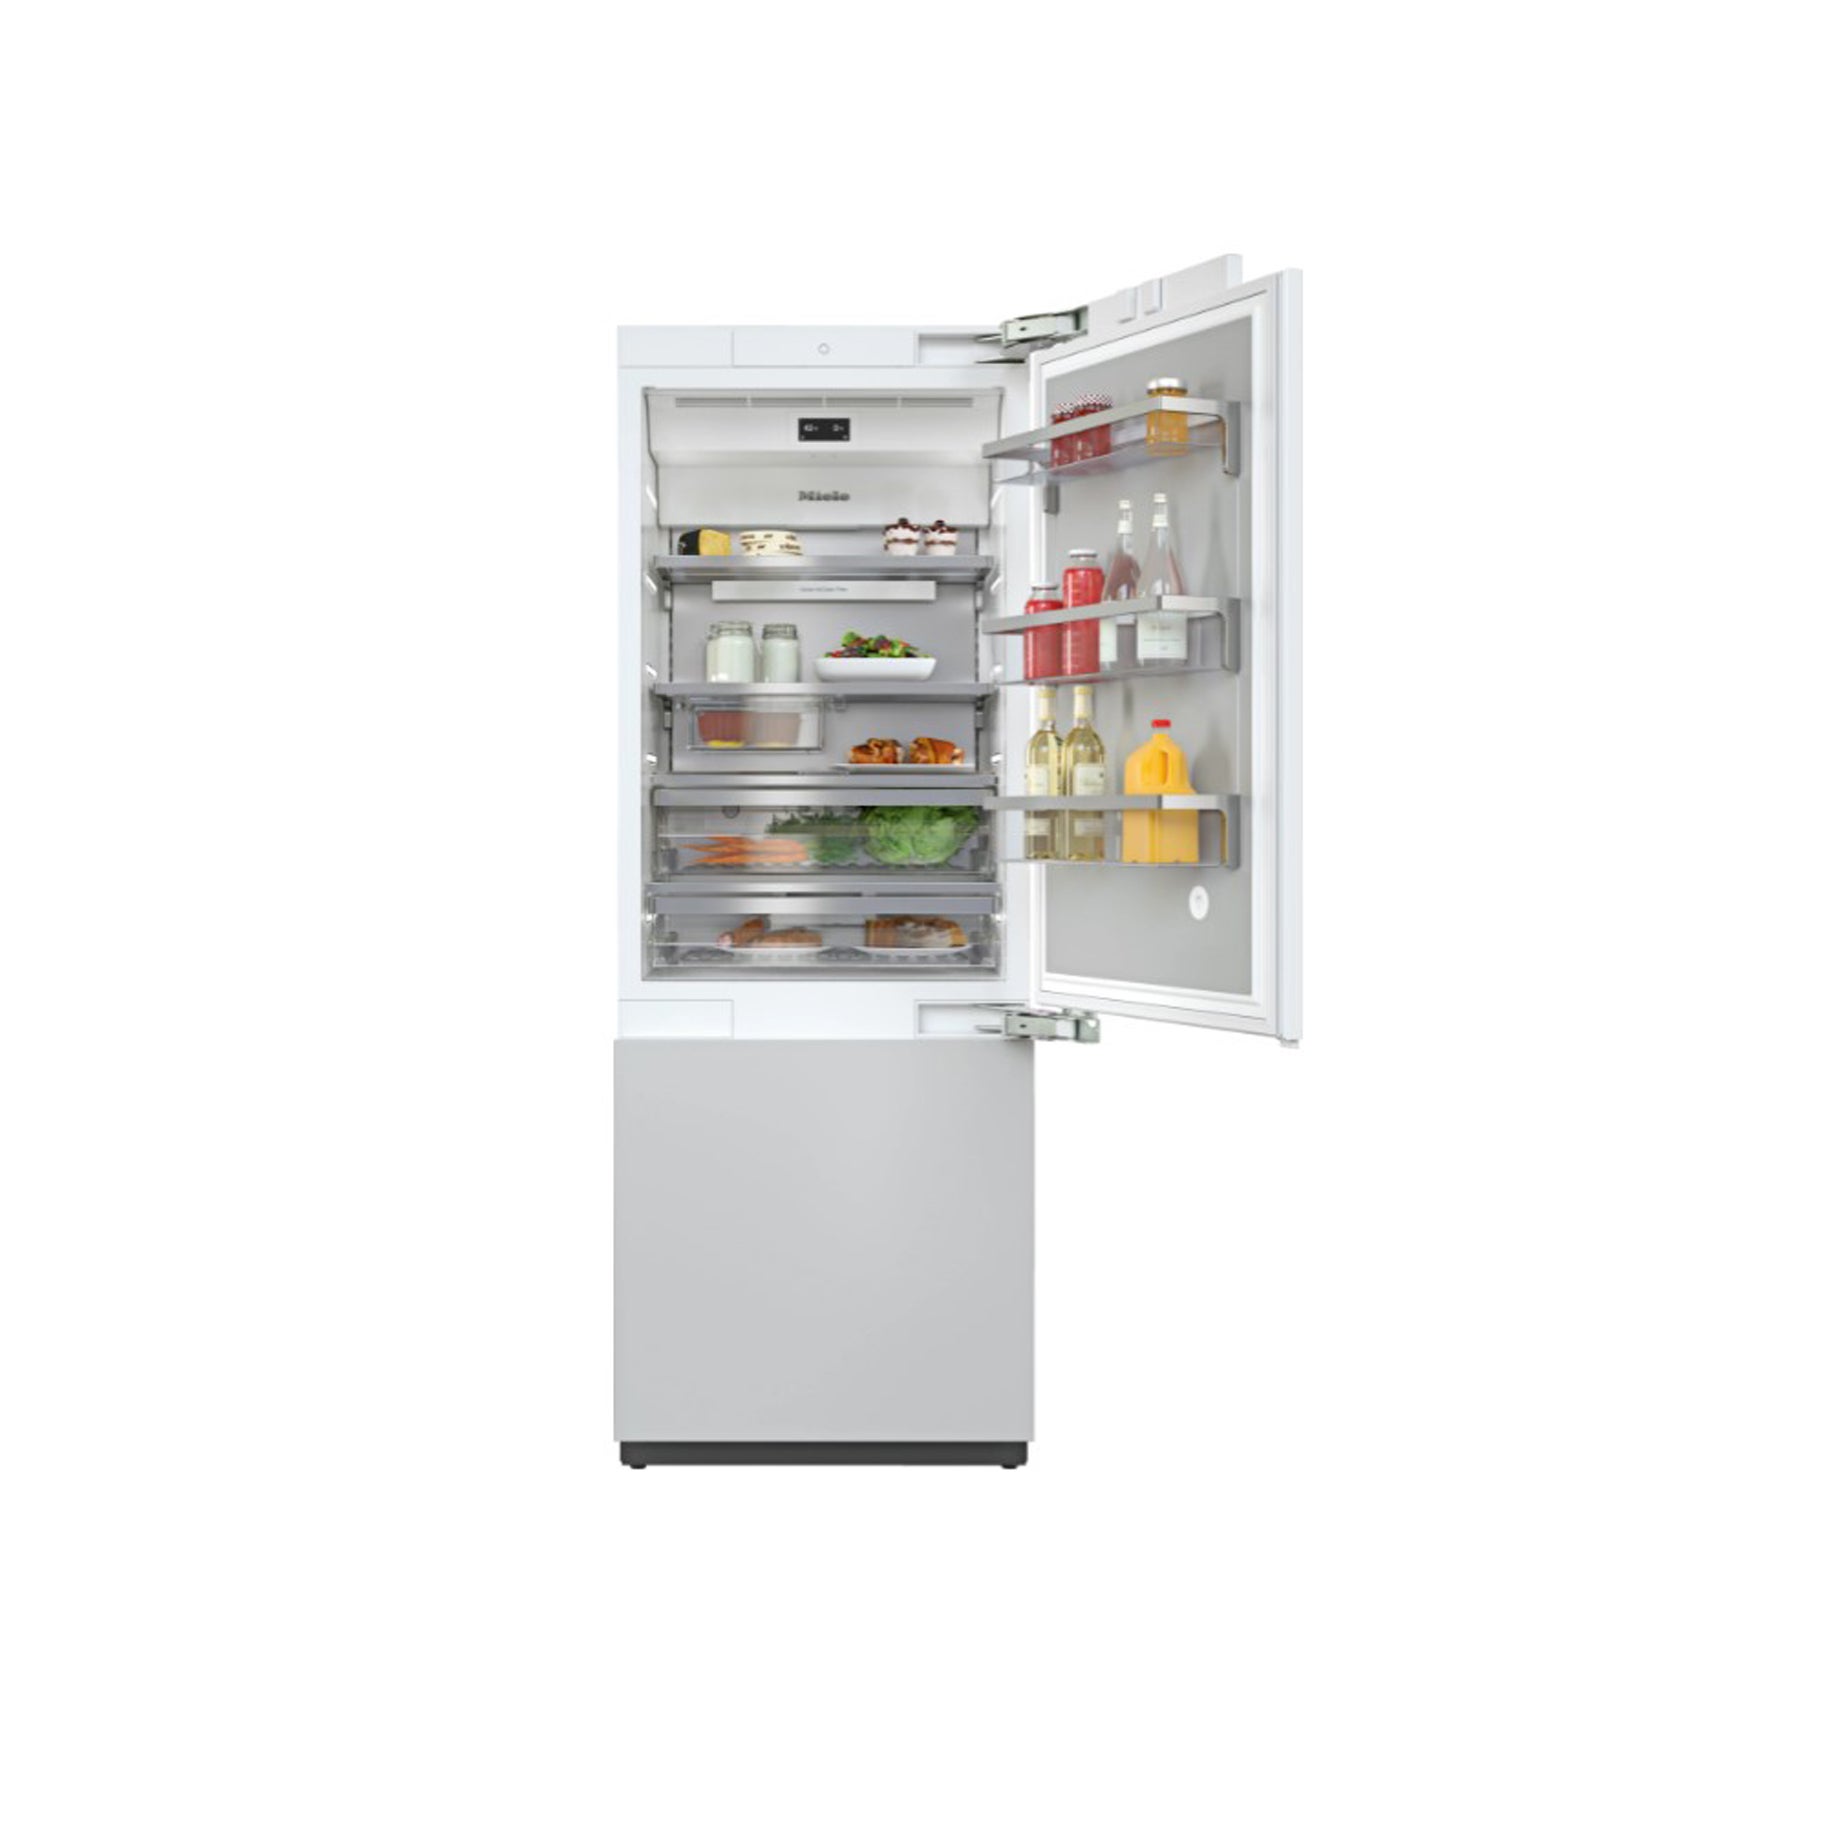 The Best Refrigerator Option: Miele Mastercool Fridge Freezer